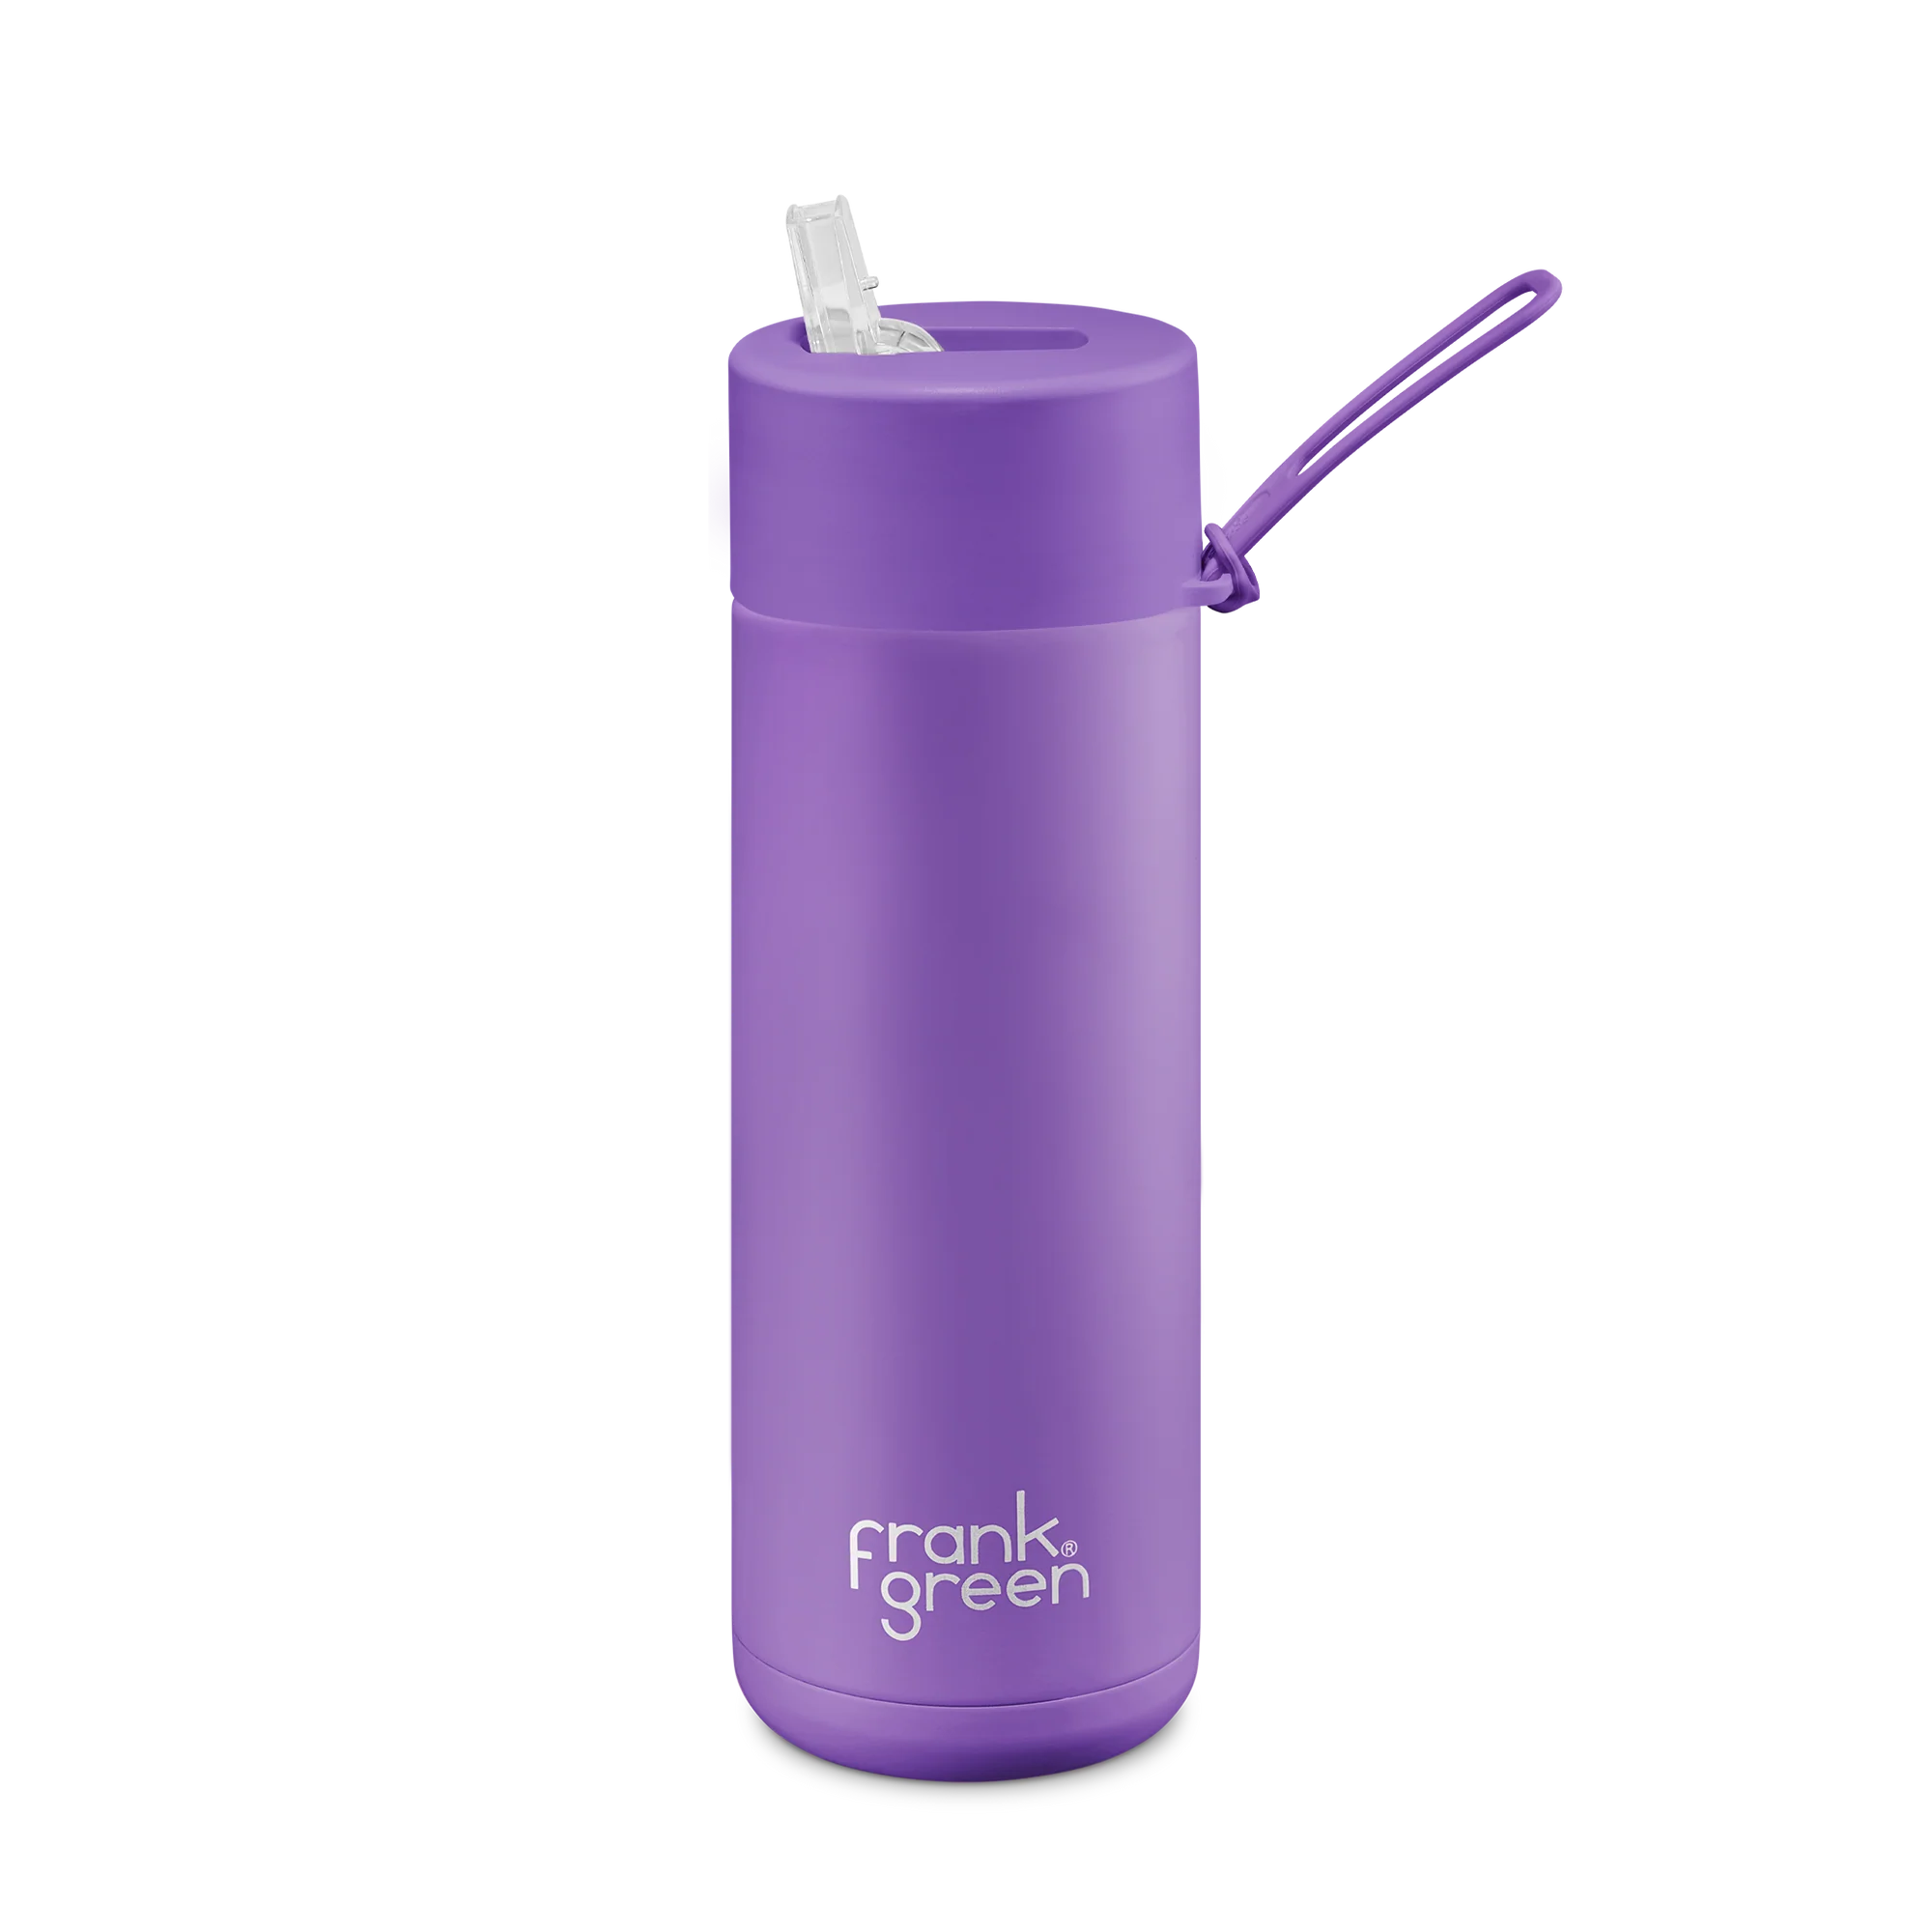 Frank Green / Stainless Steel Ceramic Reusable Bottle w/ Straw Lid (20oz) - Cosmic Purple